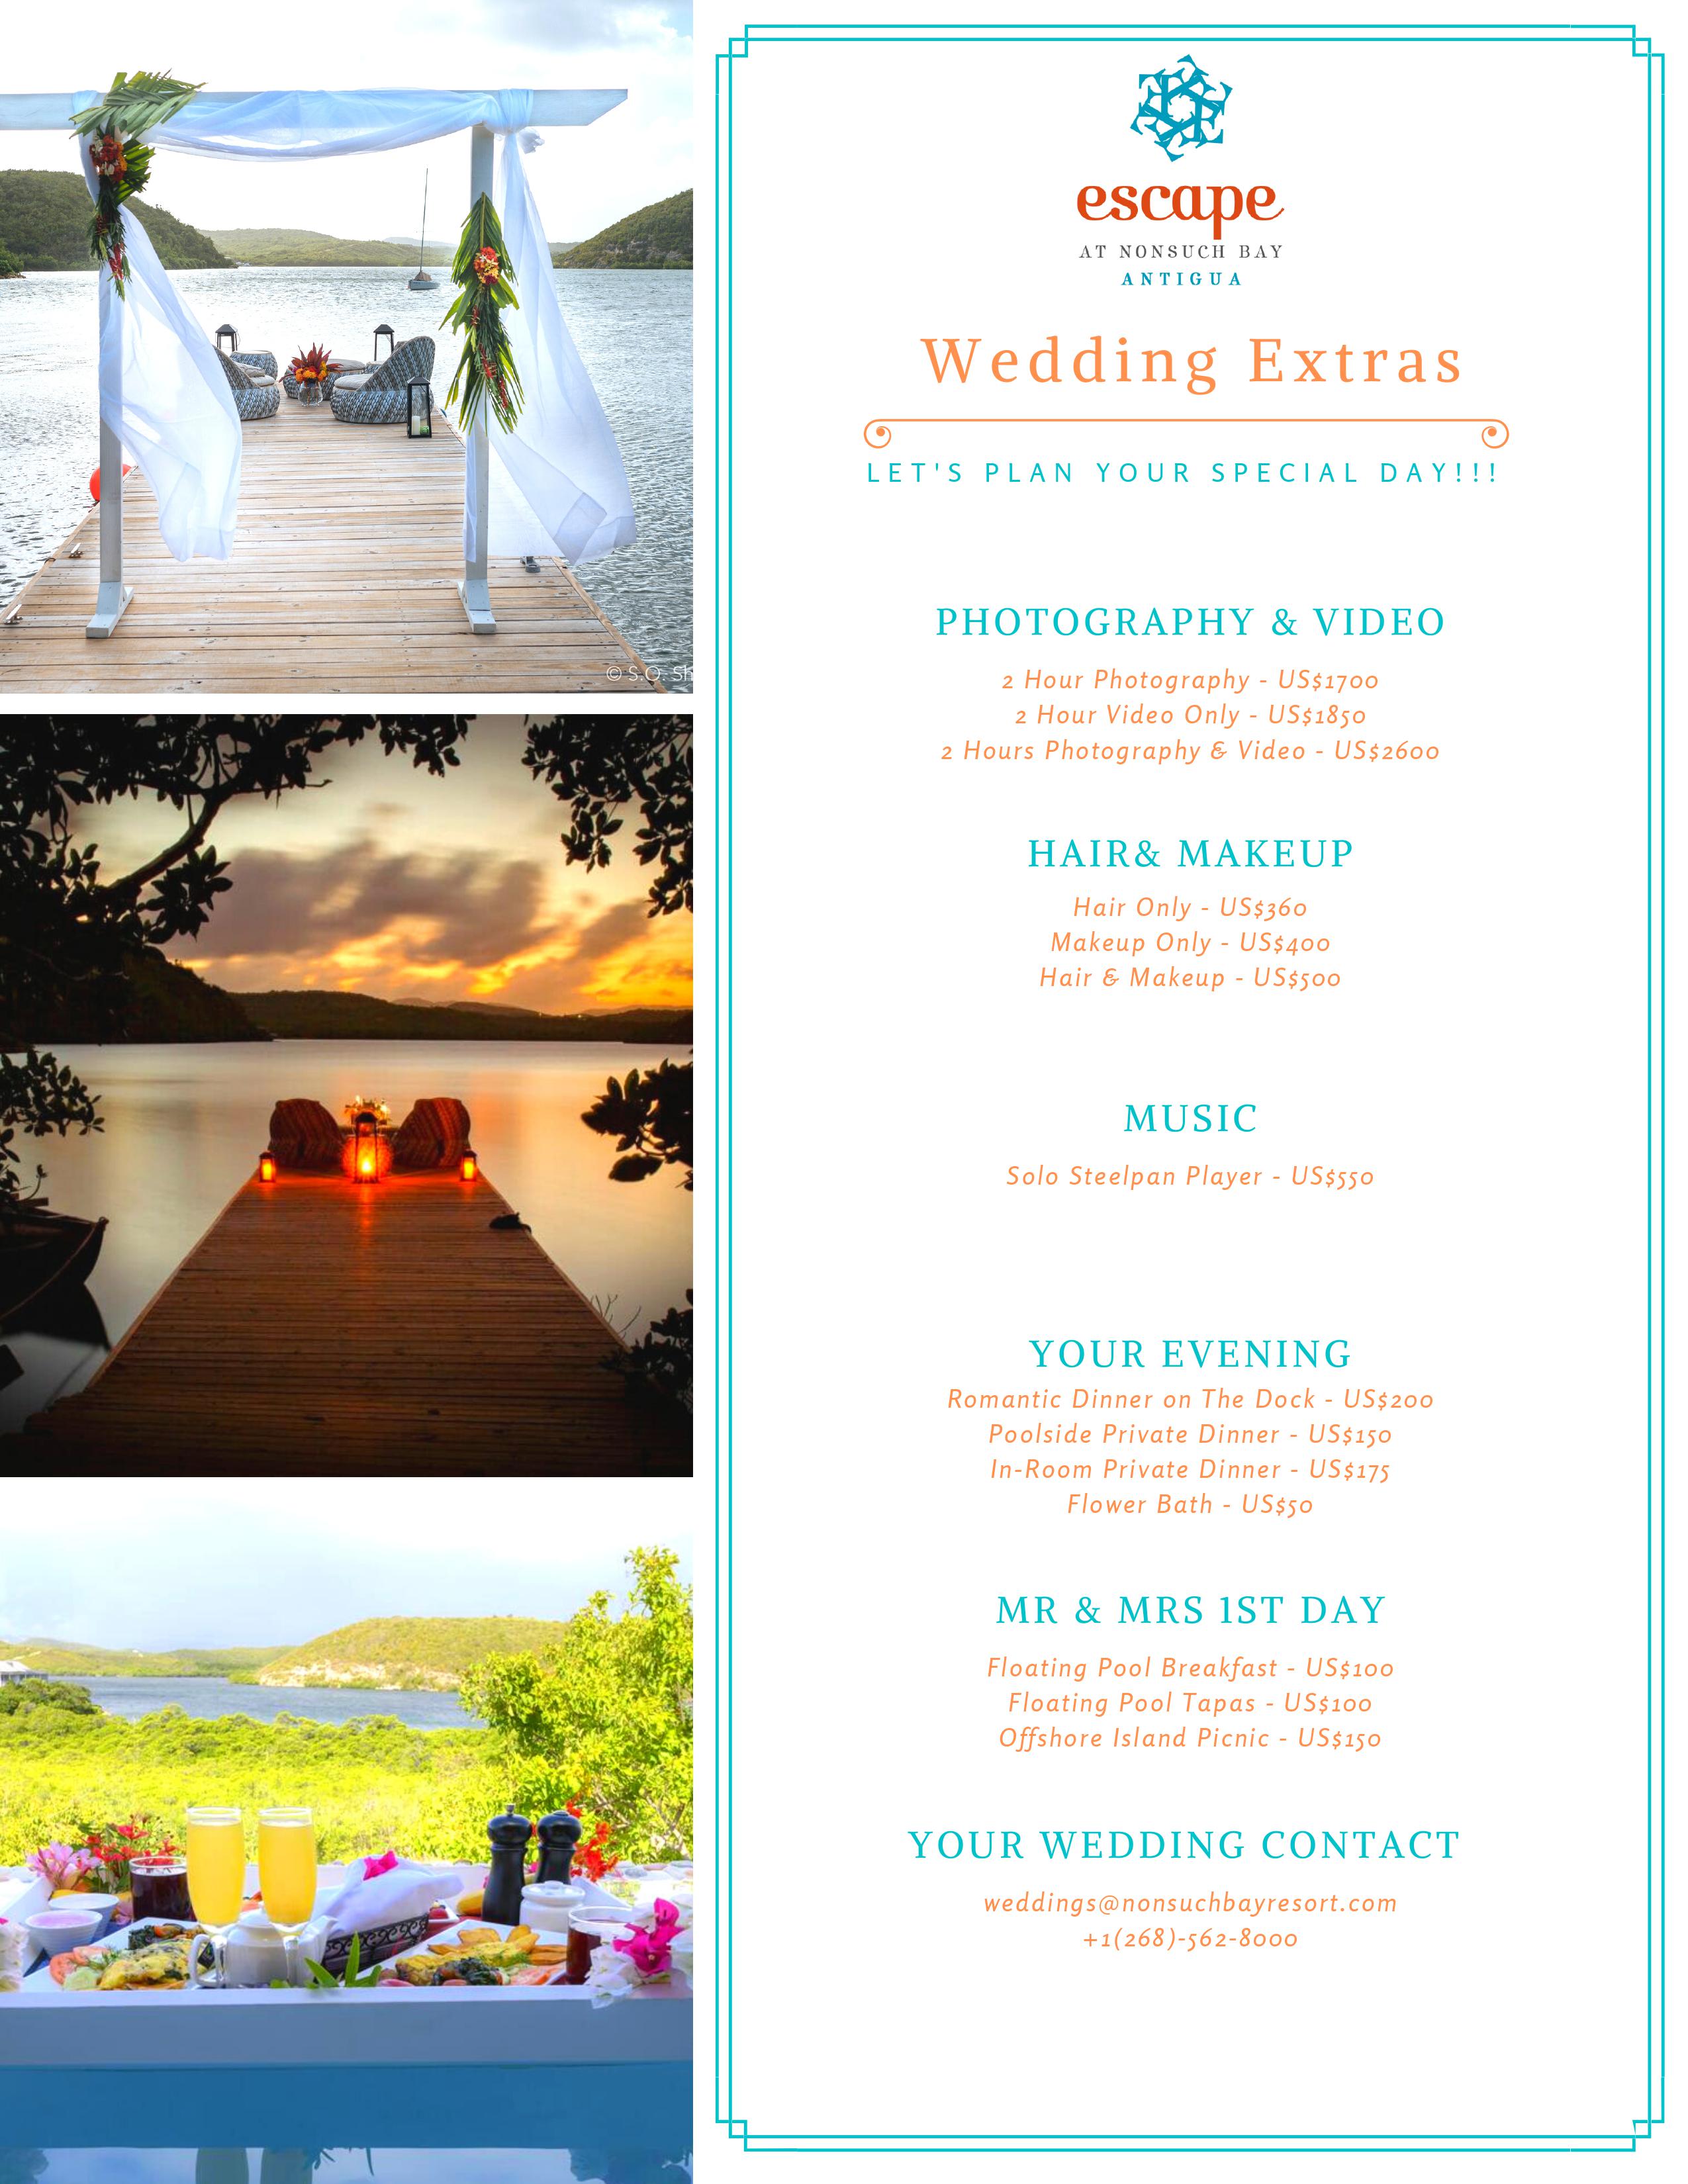 Weddings & Renewals – The Escape Antigua